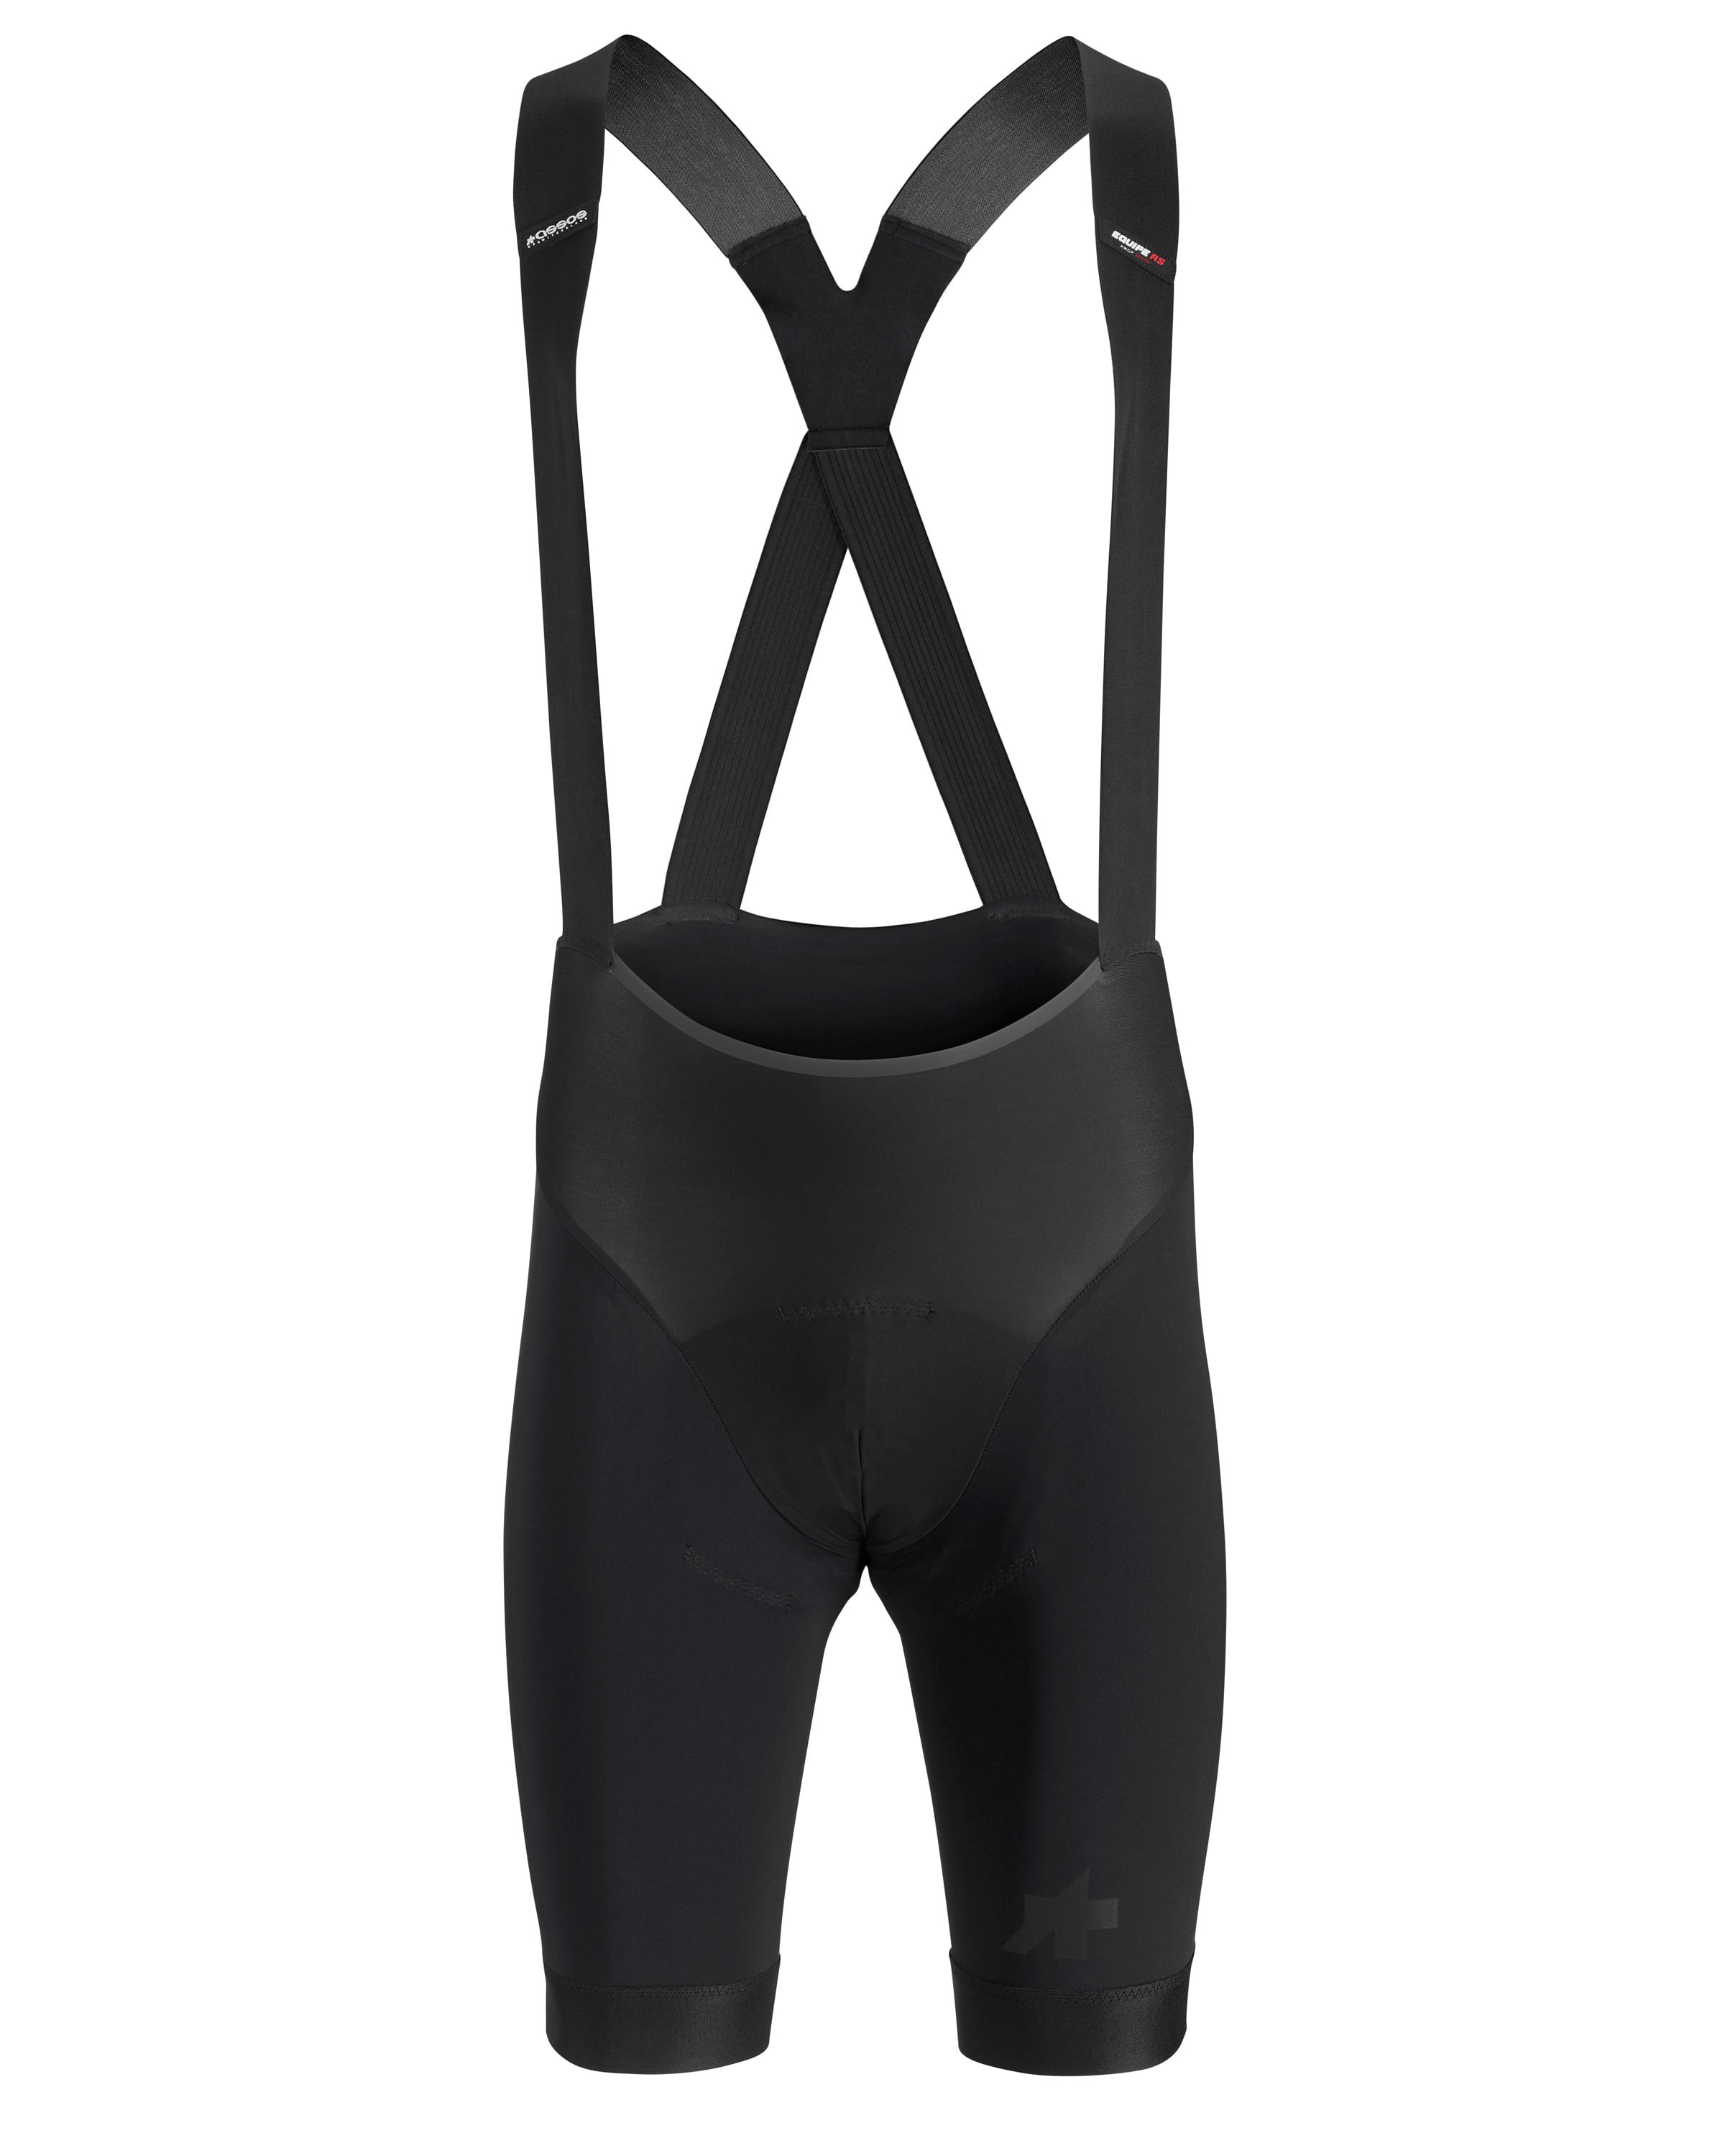 Assos Men's Black Equipe RSR S9 Bib Shorts